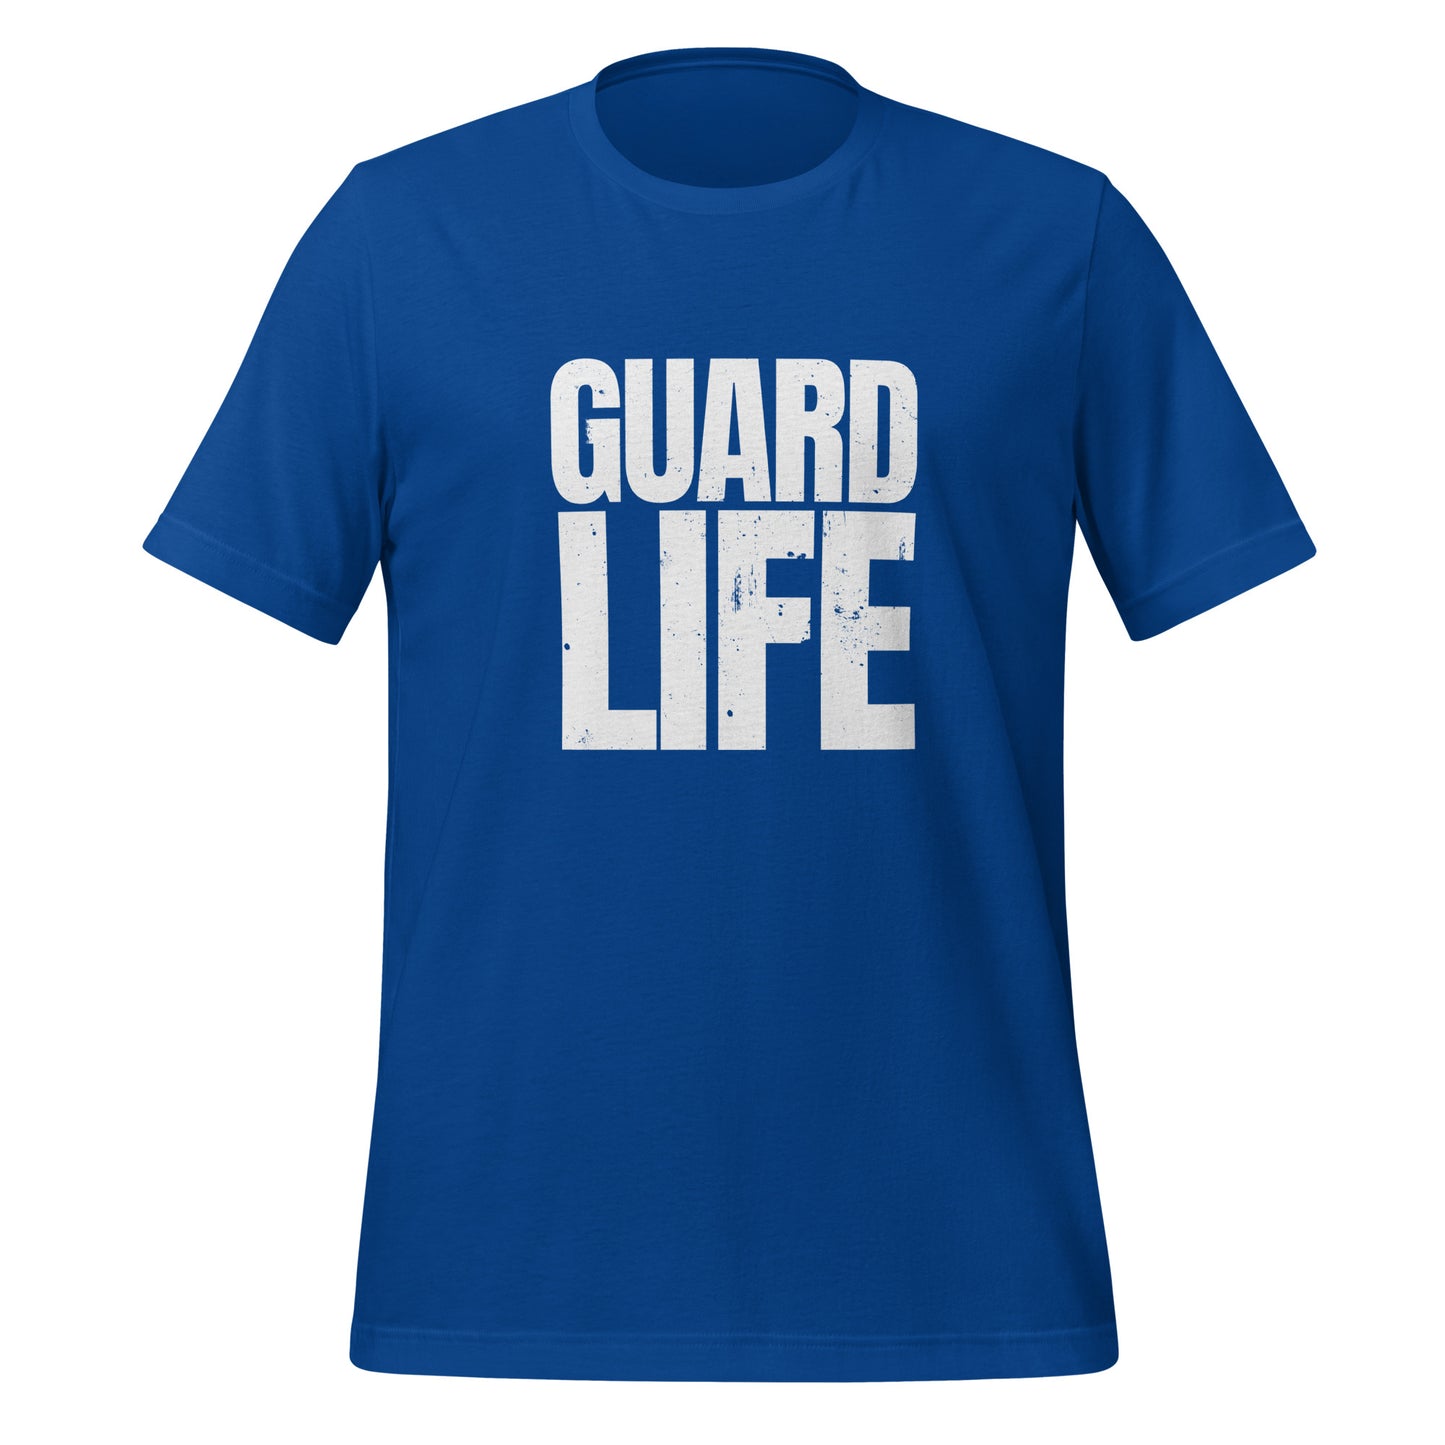 GUARD LIFE (Color Guard) Adult unisex t-shirt